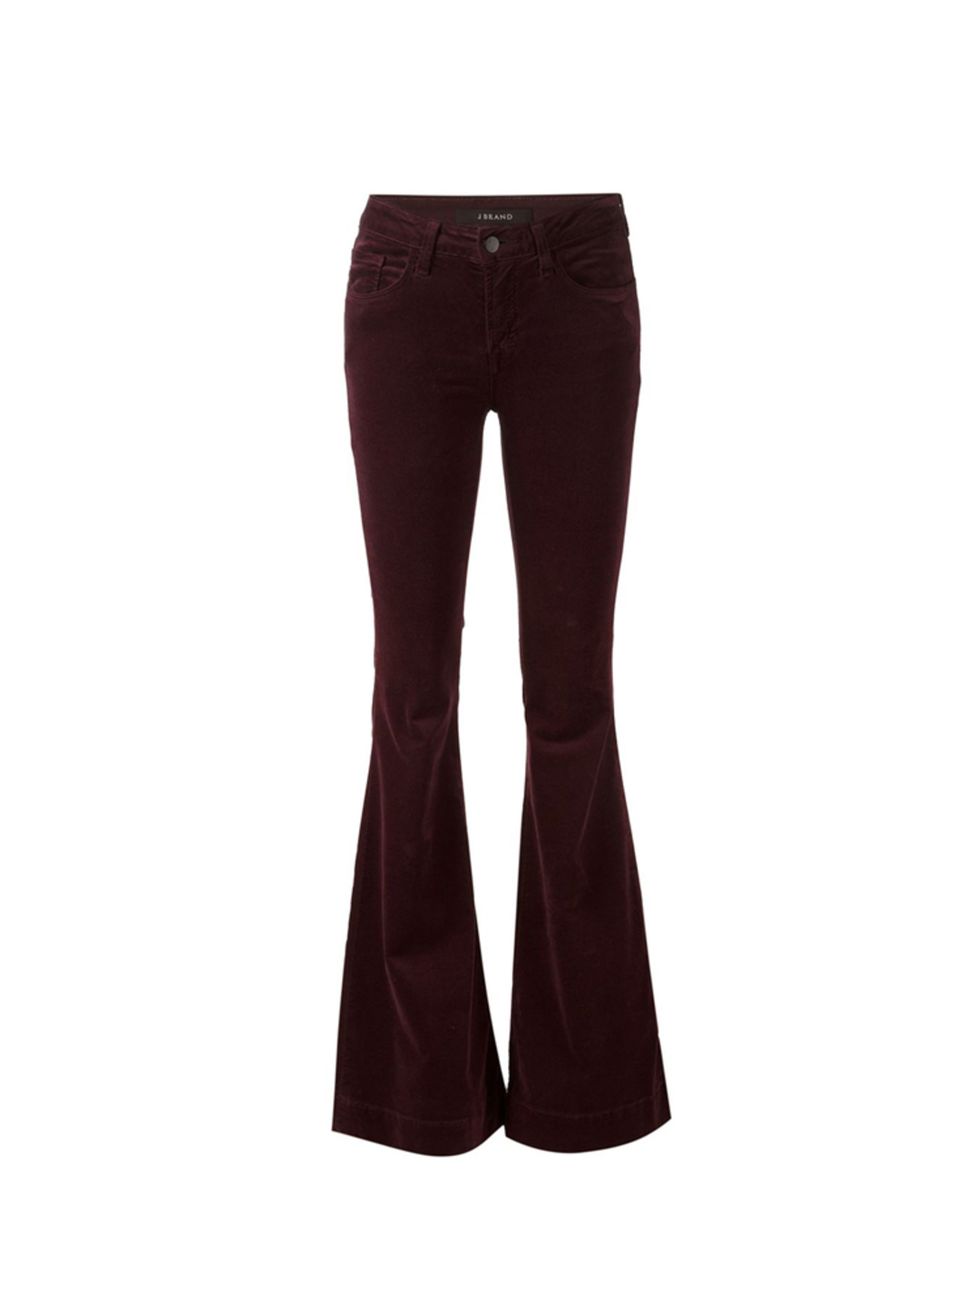 <p>J Brand at <a href="http://www.farfetch.com/uk/shopping/women/j-brand-velvet-flared-trousers--item-11190704.aspx?storeid=9423&ffref=lp_pic_3_15_" target="_blank">Farfetch</a>, £242</p>